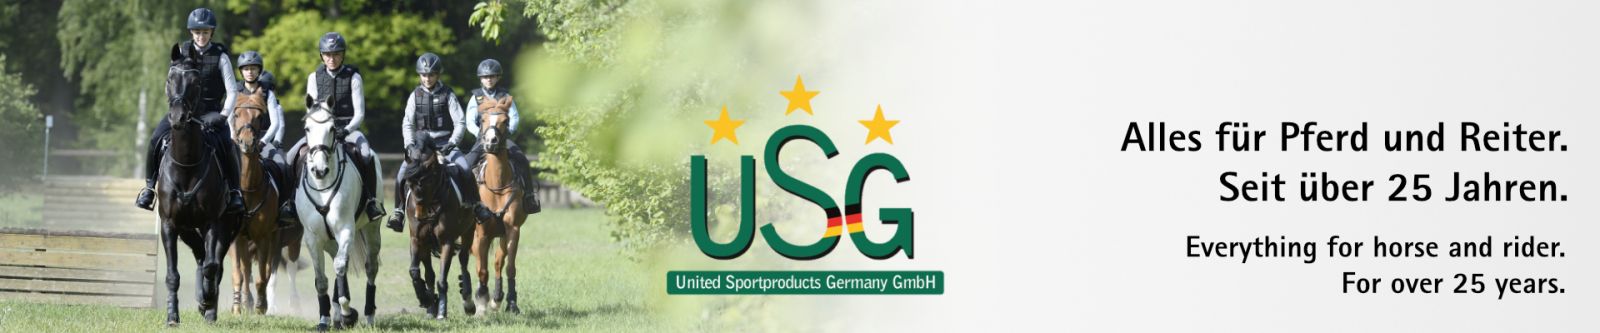 Imprint - USG - United Sportproducts Germany GmbH